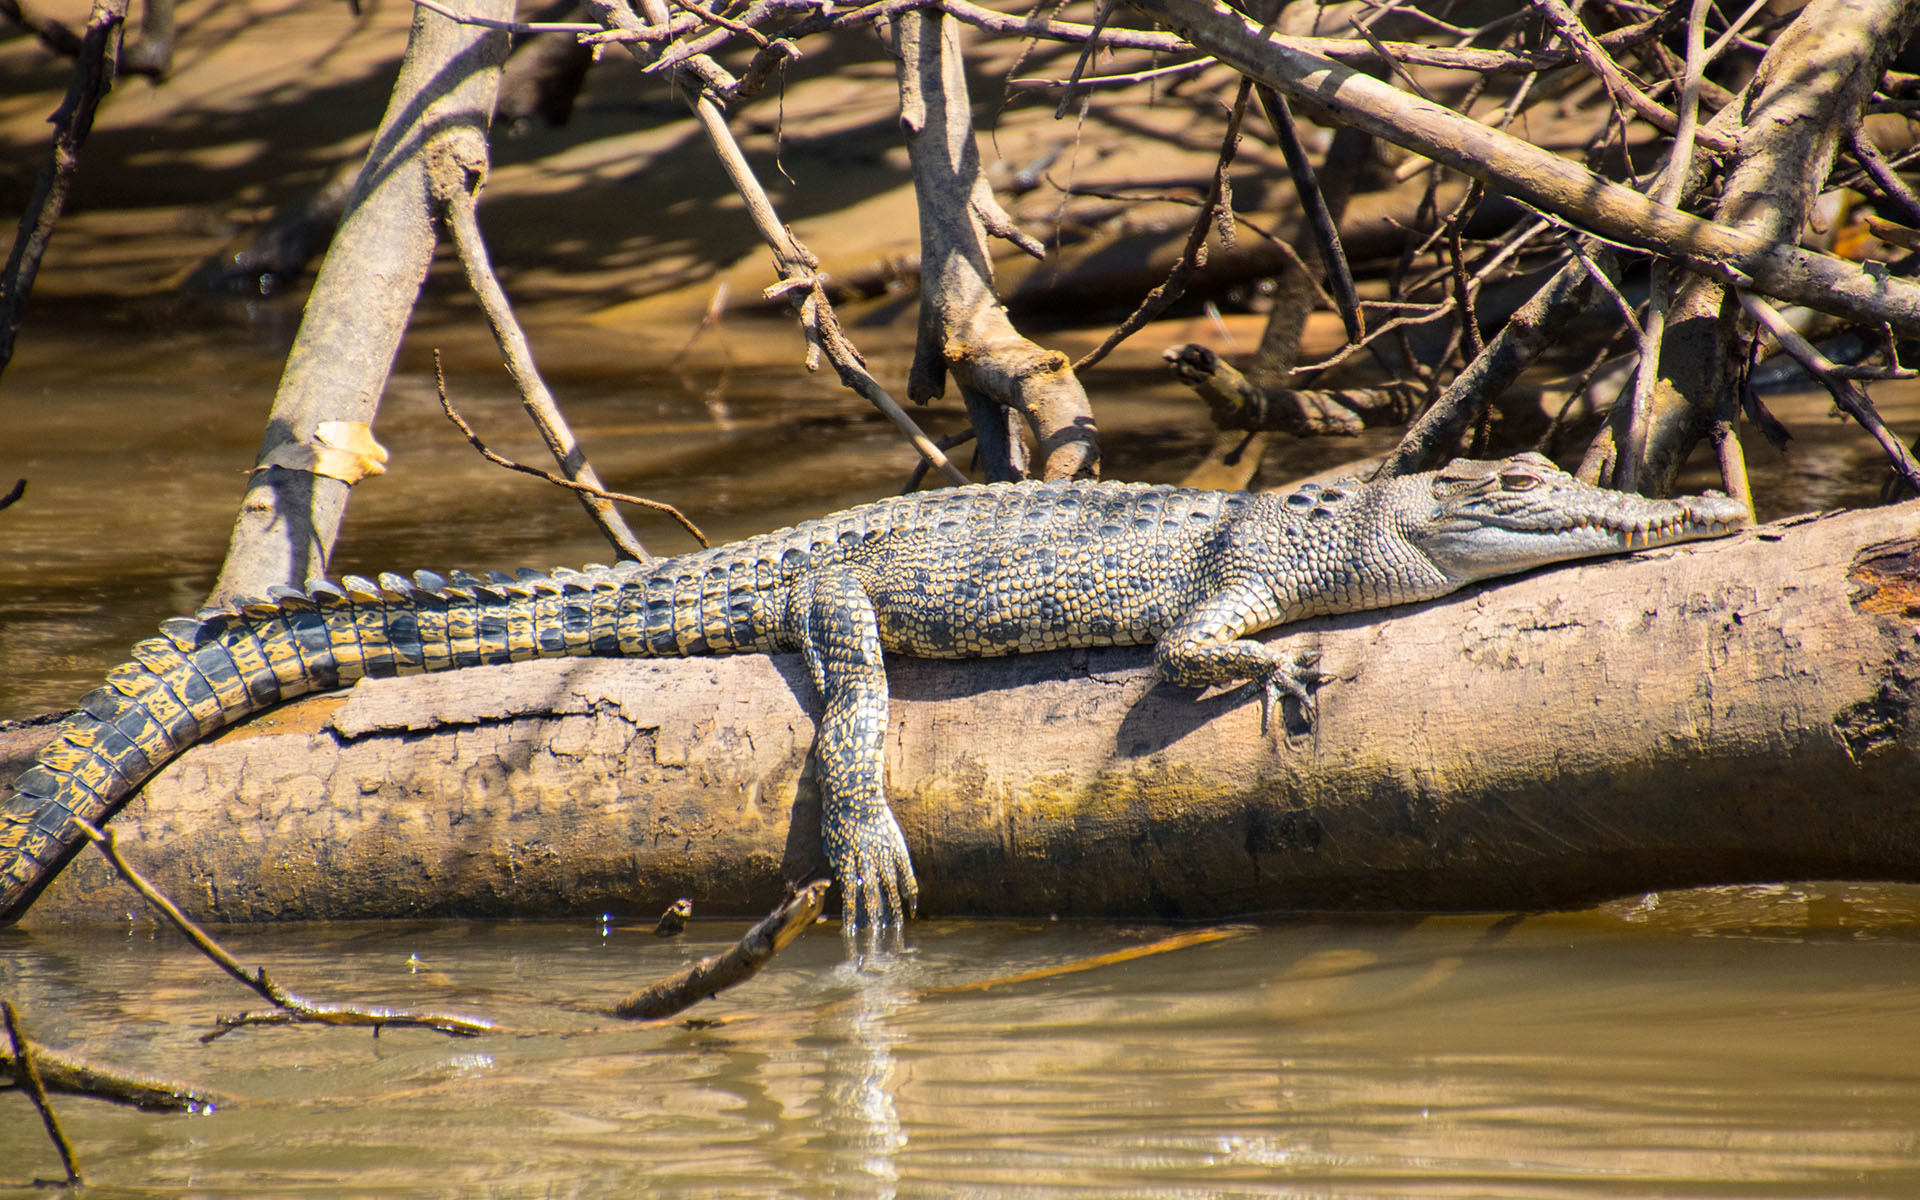 Sunning Crocodile